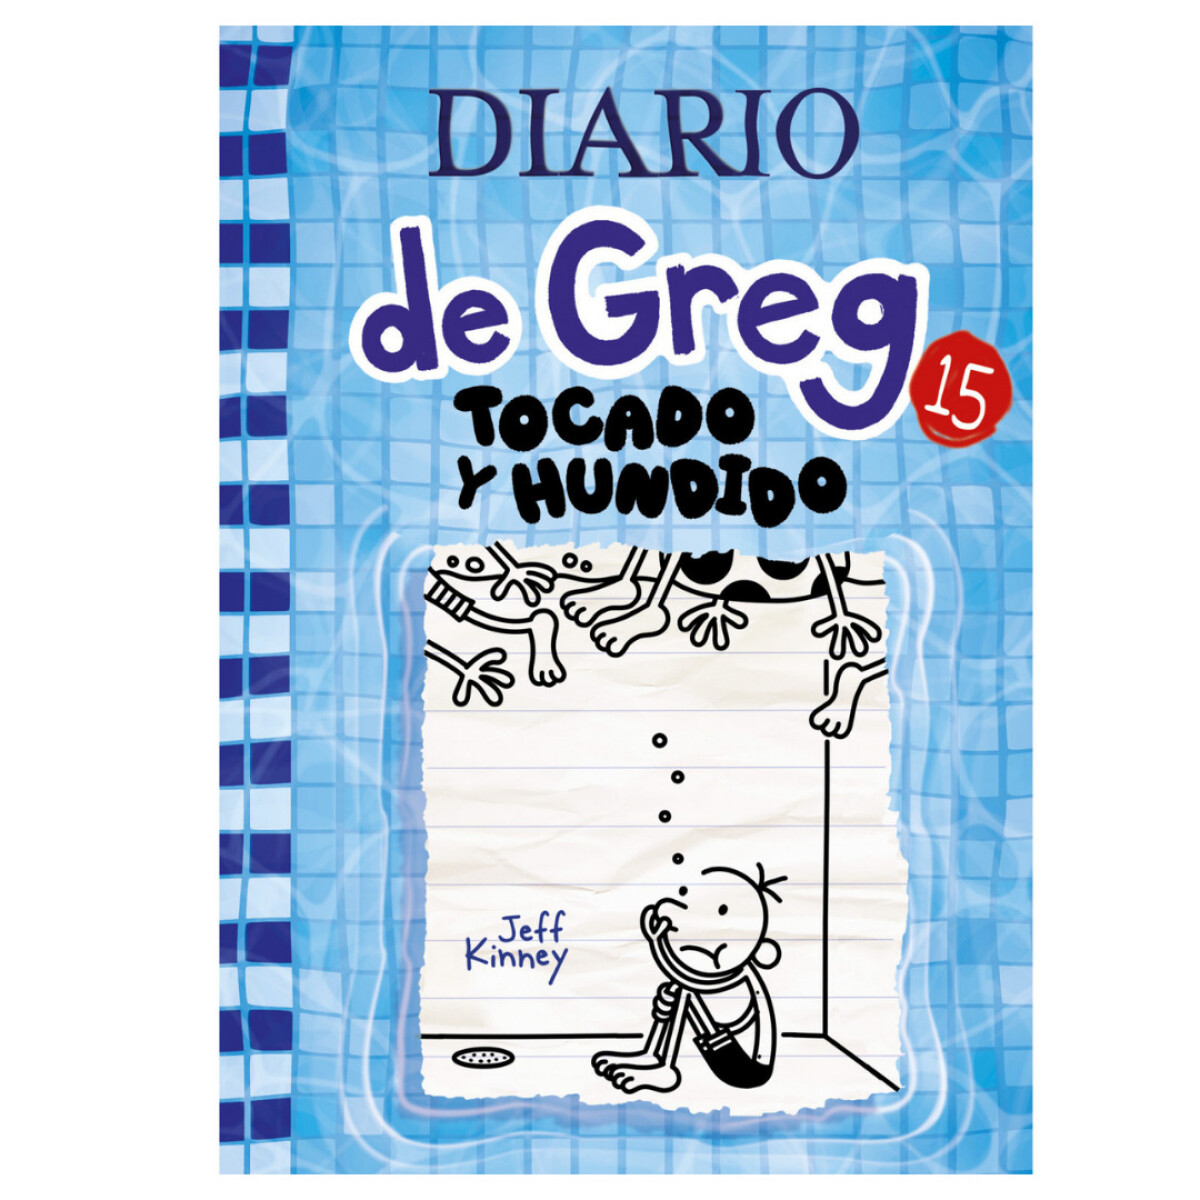 Libro Diario de Greg 15: Tocado y Hundido - Jeff Kinney - 001 